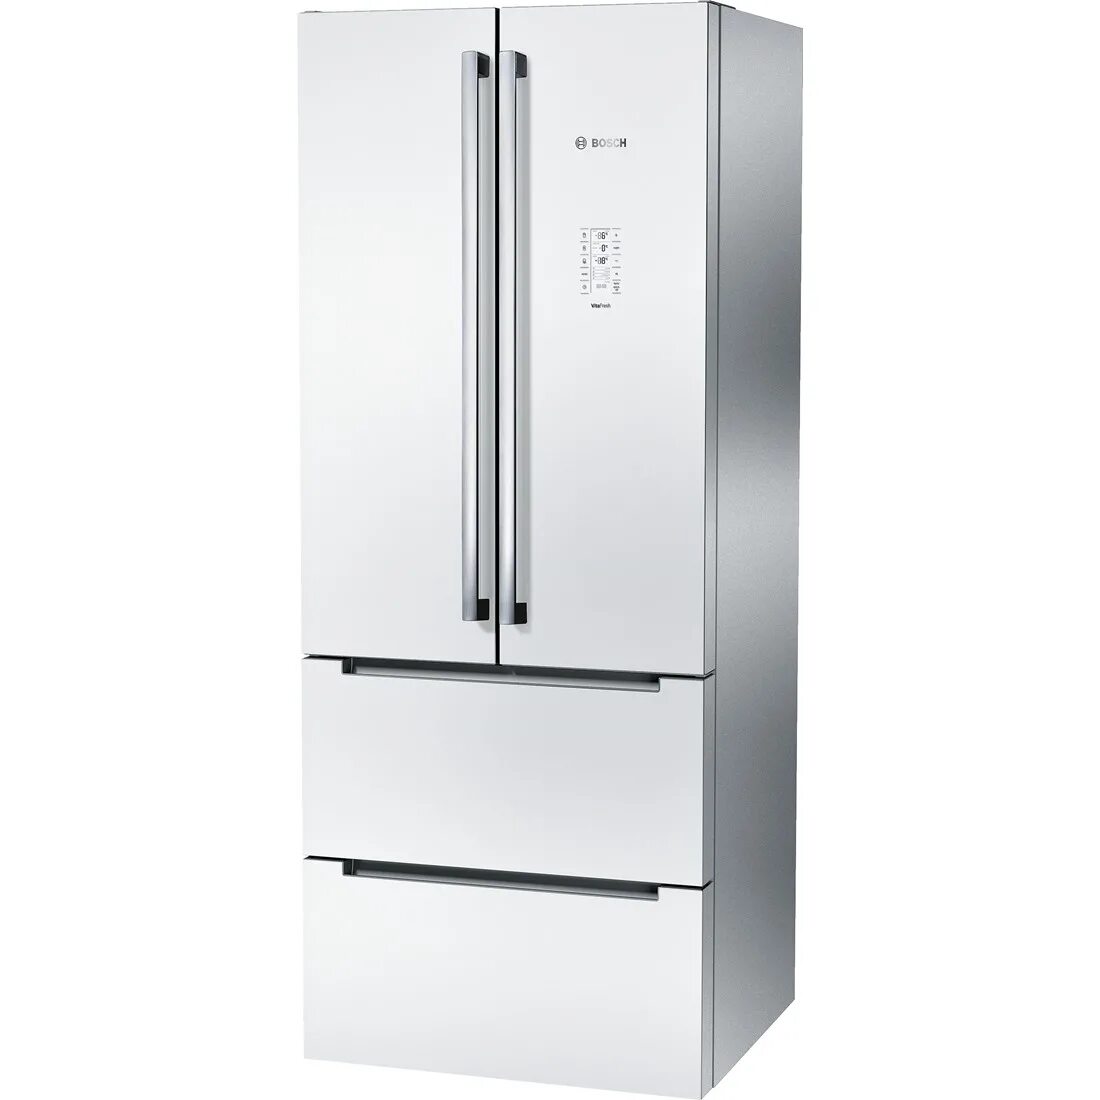 Холодильник Bosch Side by Side. Белый Side by Side Bosch. Холодильник Side by Side белый. Холодильник бош двухдверный.